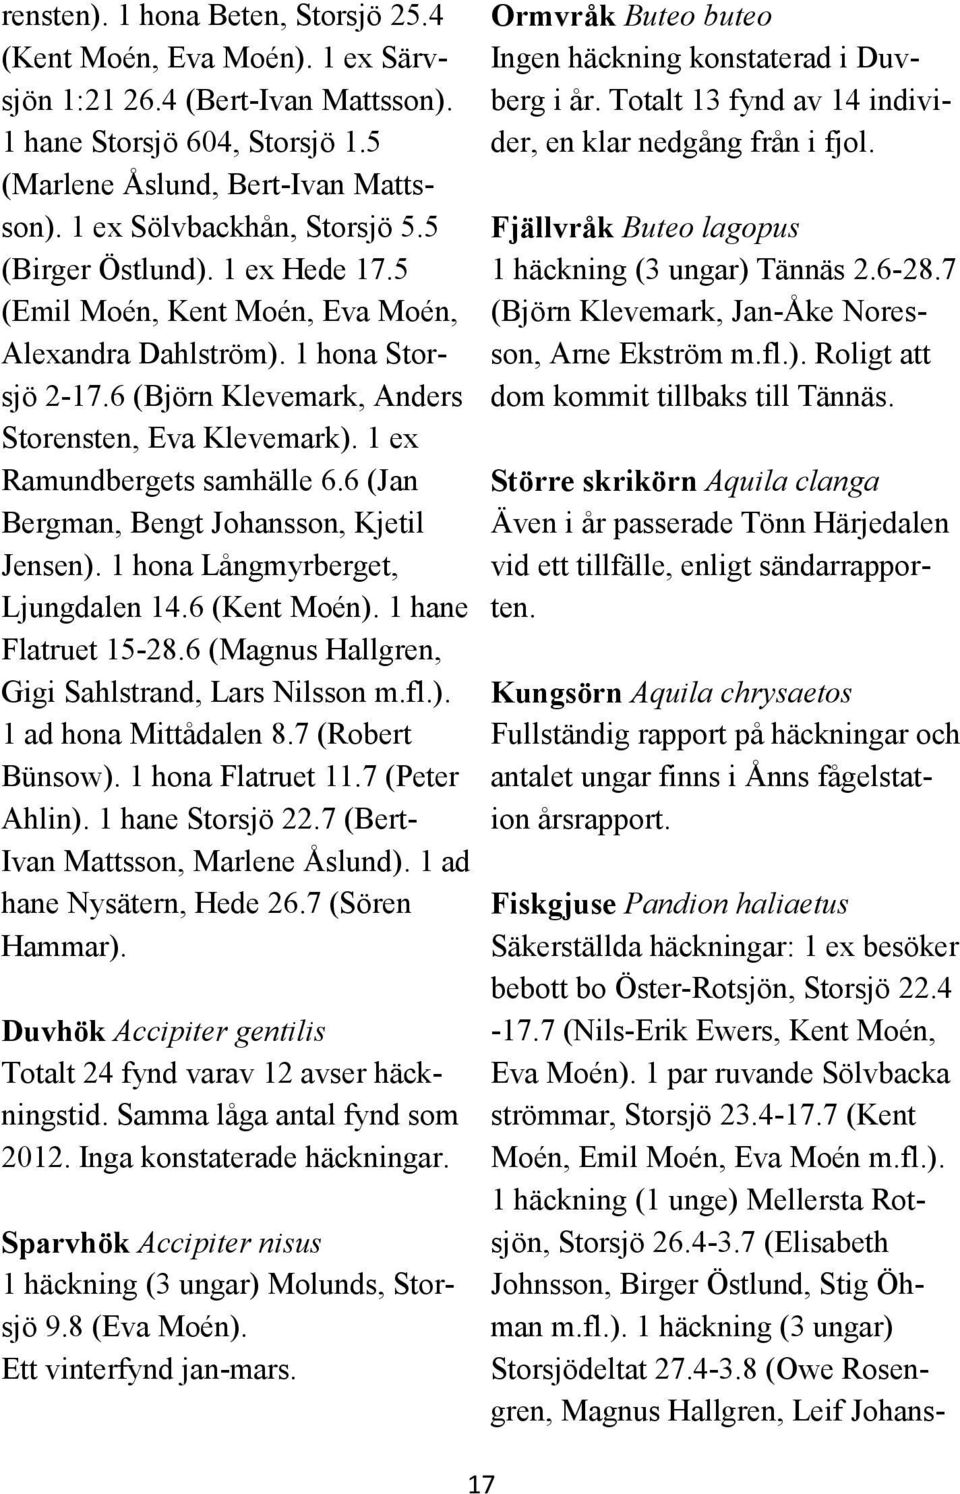 1 ex Ramundbergets samhälle 6.6 (Jan Bergman, Bengt Johansson, Kjetil Jensen). 1 hona Långmyrberget, Ljungdalen 14.6 (Kent Moén). 1 hane Flatruet 15-28.